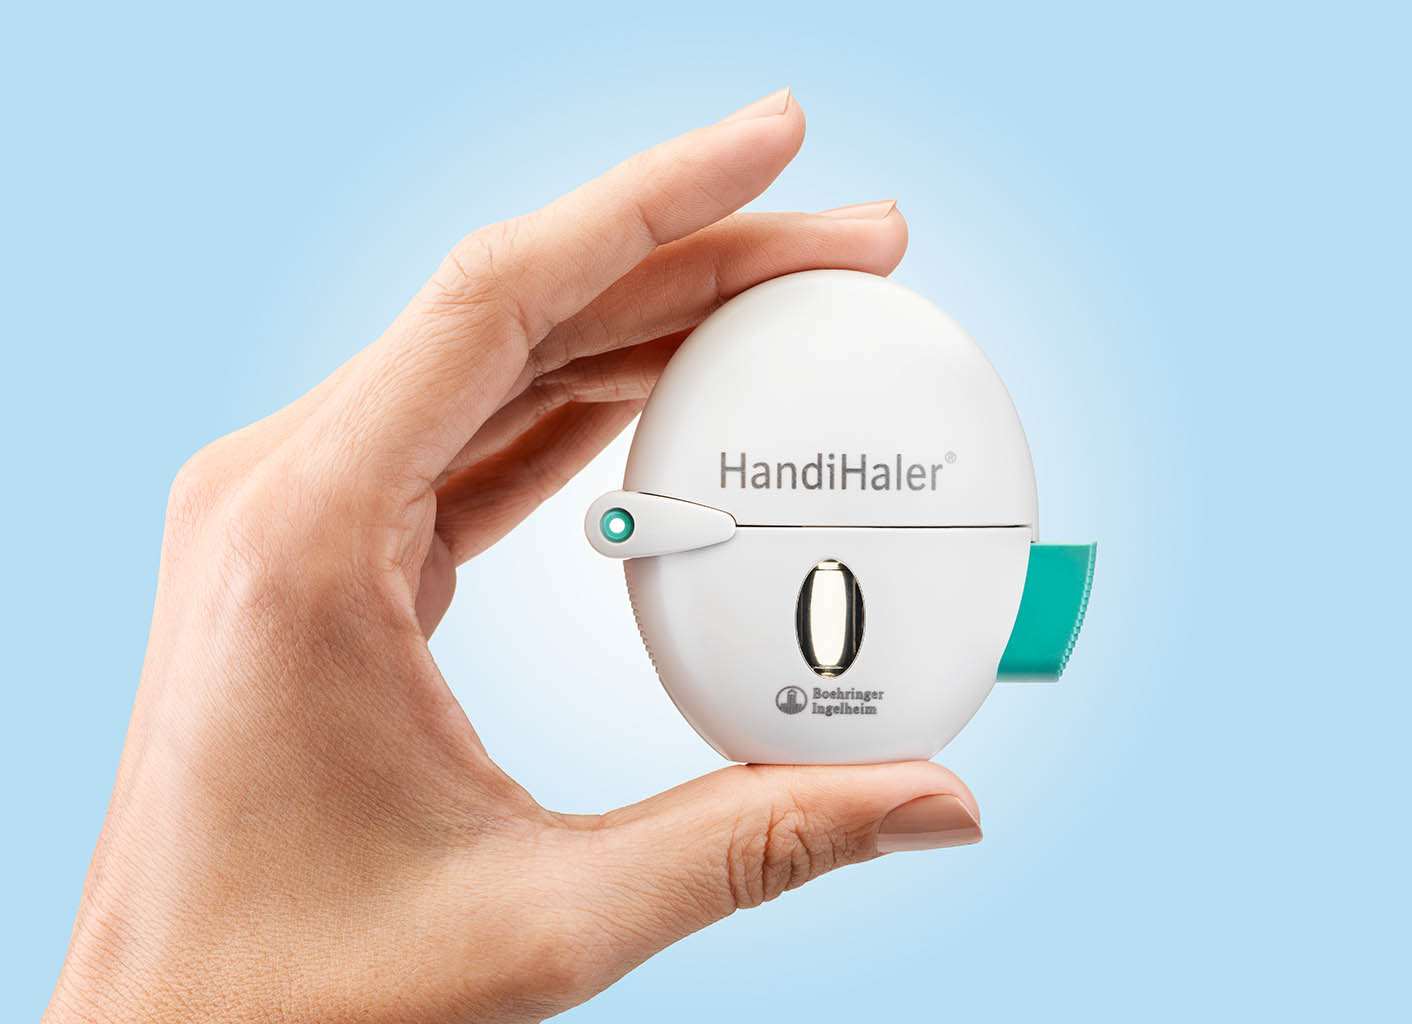 Still Life Product Photography of HandiHaler asthma inhaler by Packshot Factory